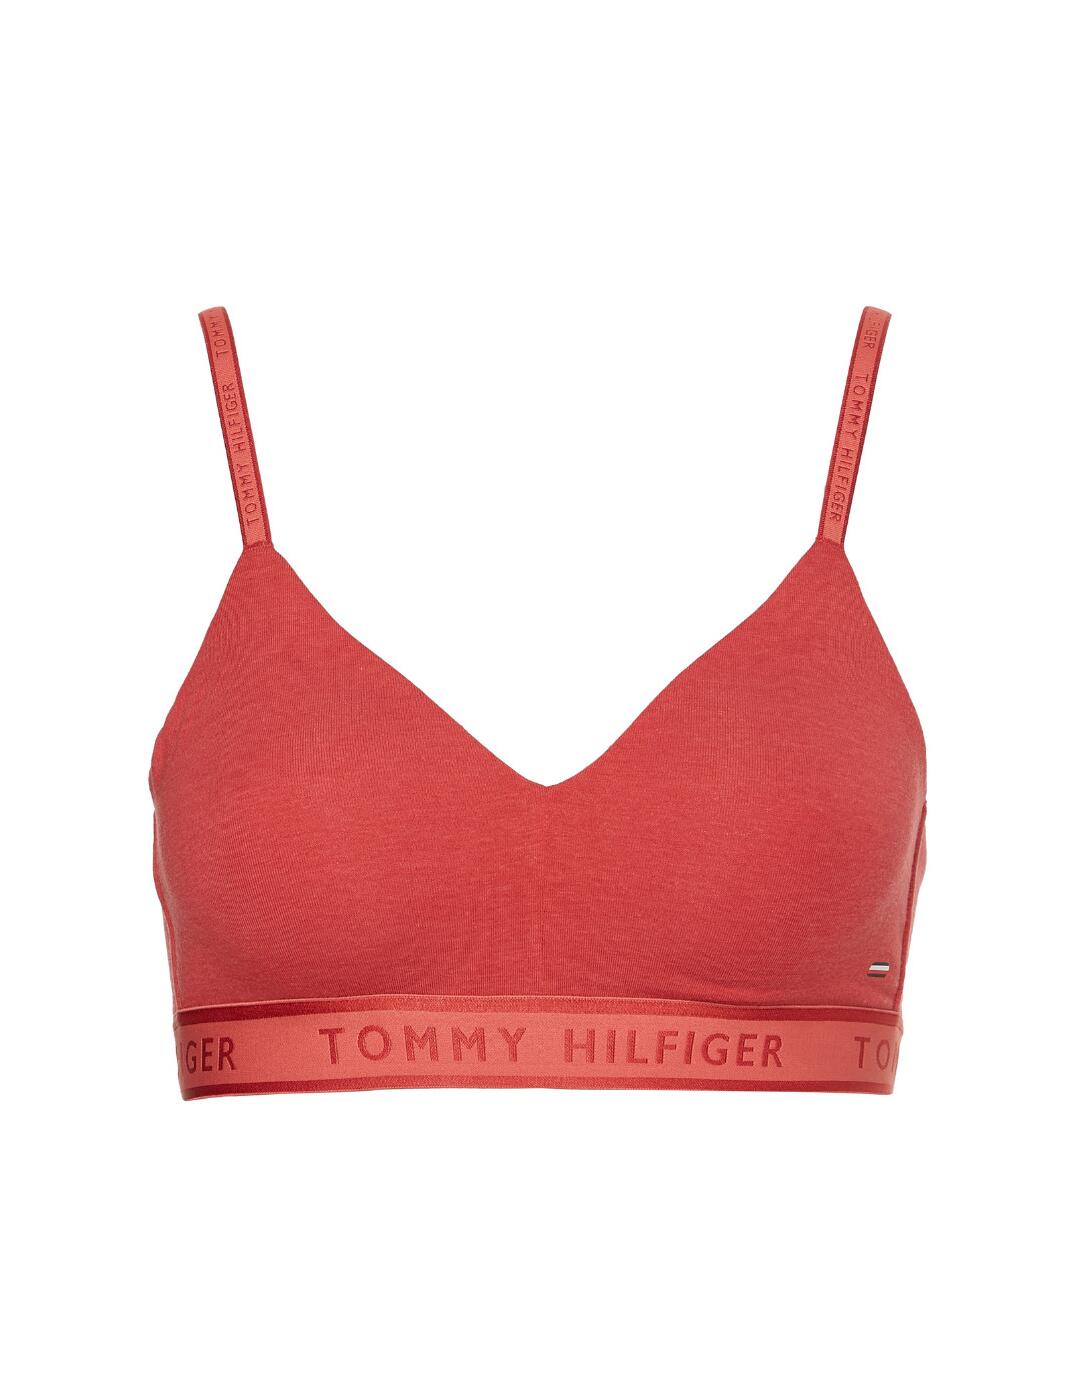 Tommy Hilfiger Bras orange Size S, Women's Bralets & Bra Tops